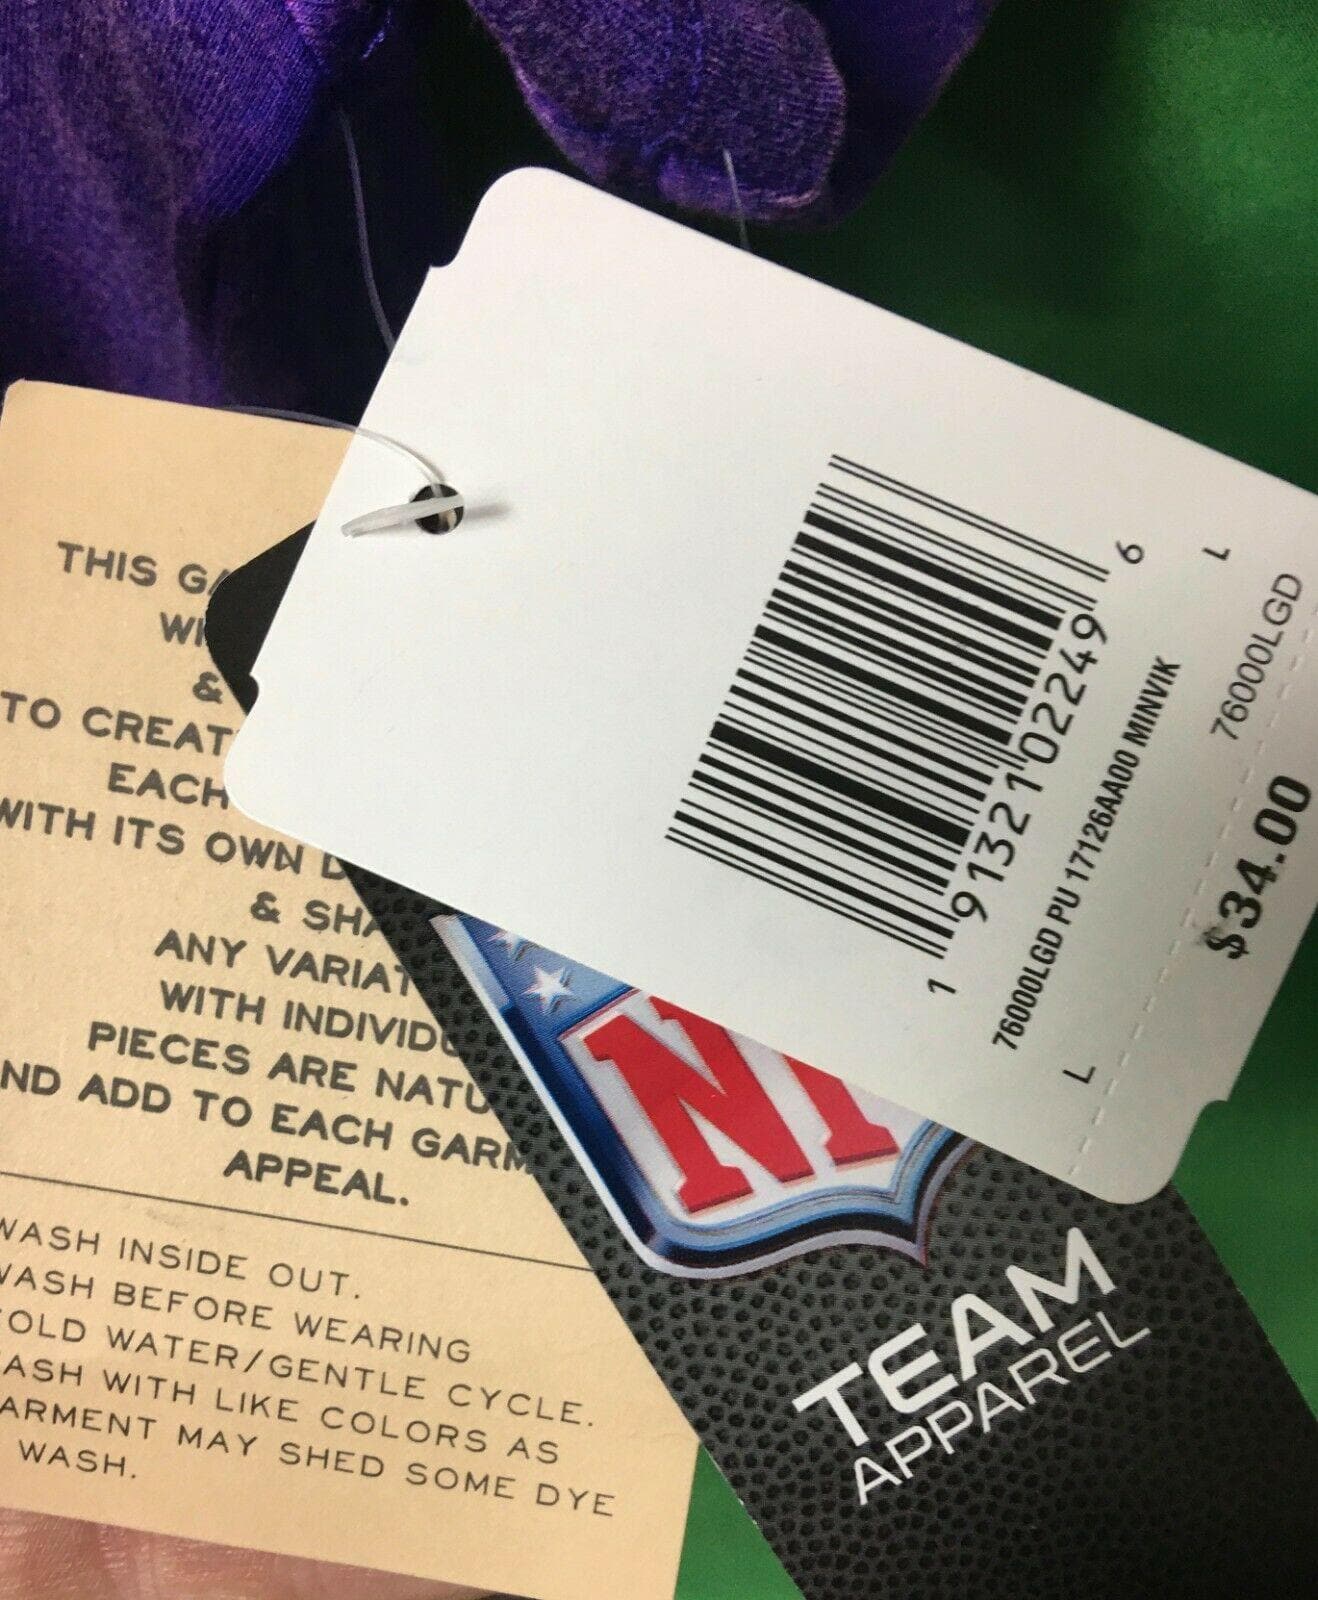 NFL Minnesota Vikings Purple Garment Dyed Soft T-Shirt Women's Large NWT